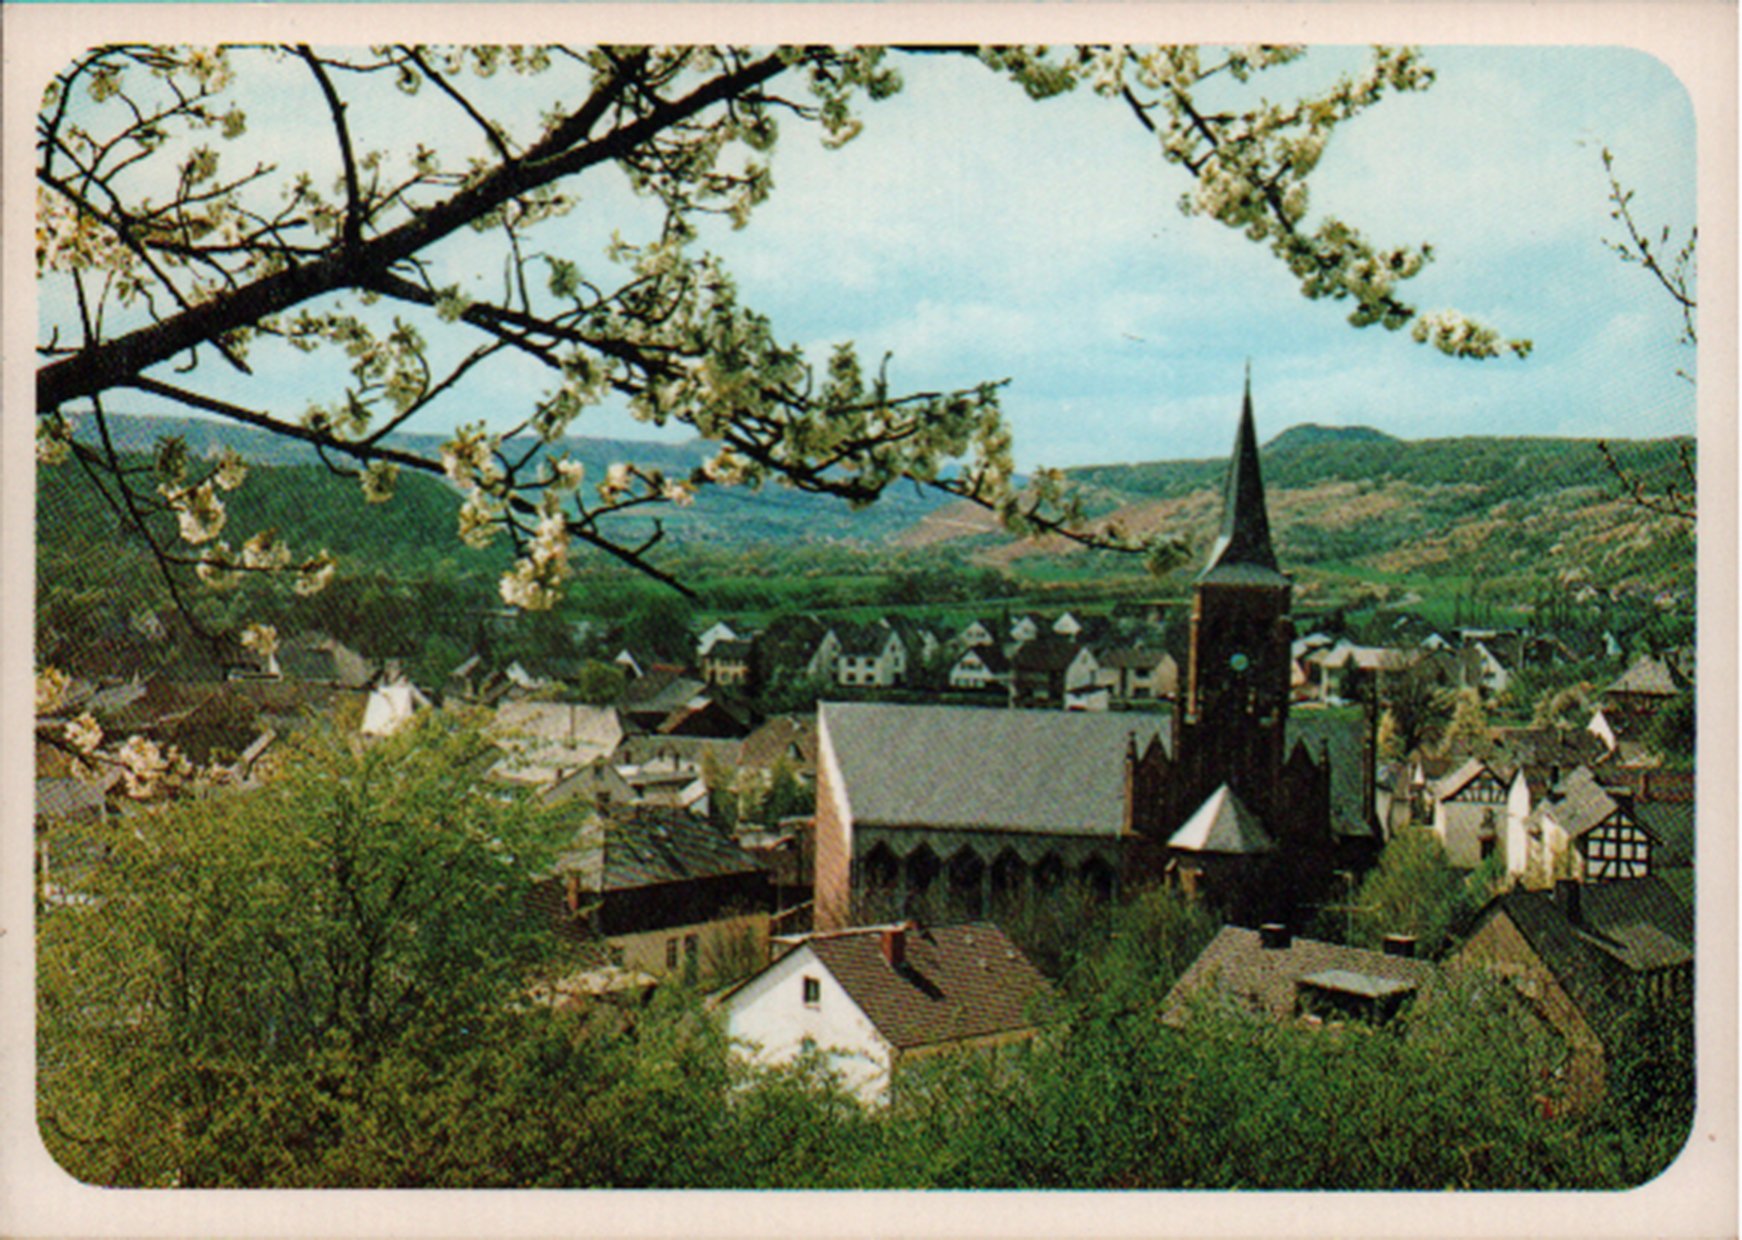 Ansichtskarte Motiv "Blick vom Reisberg auf Kirche und Ort" (Robert Cornely Verlag, Bad Wörishofen CC BY-NC-SA)